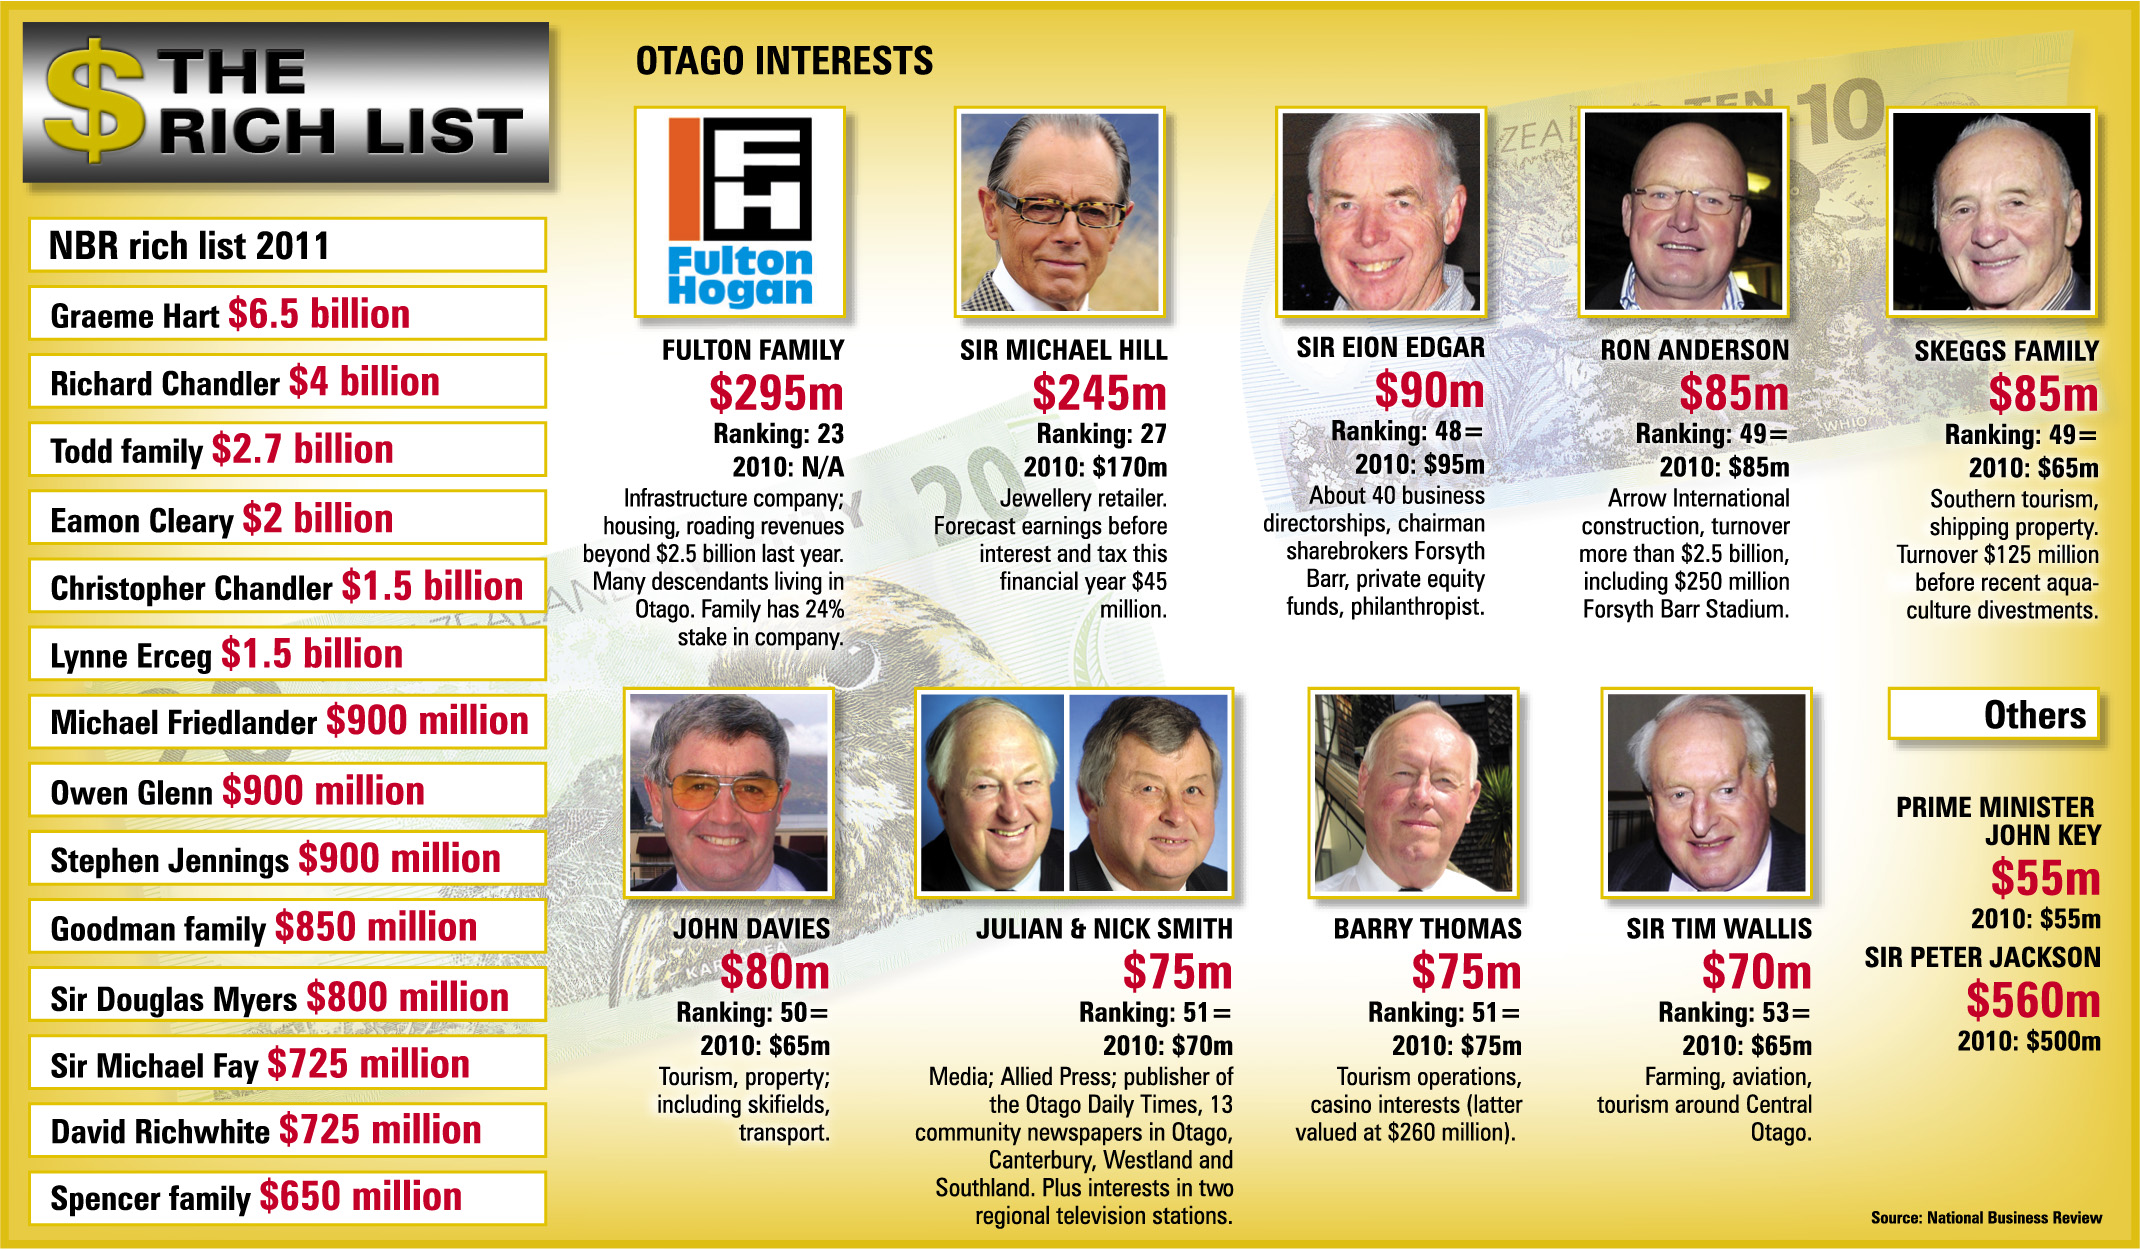 Nine Otago Multimillionaires In Nbr Rich List Otago Daily Times Online News 8725